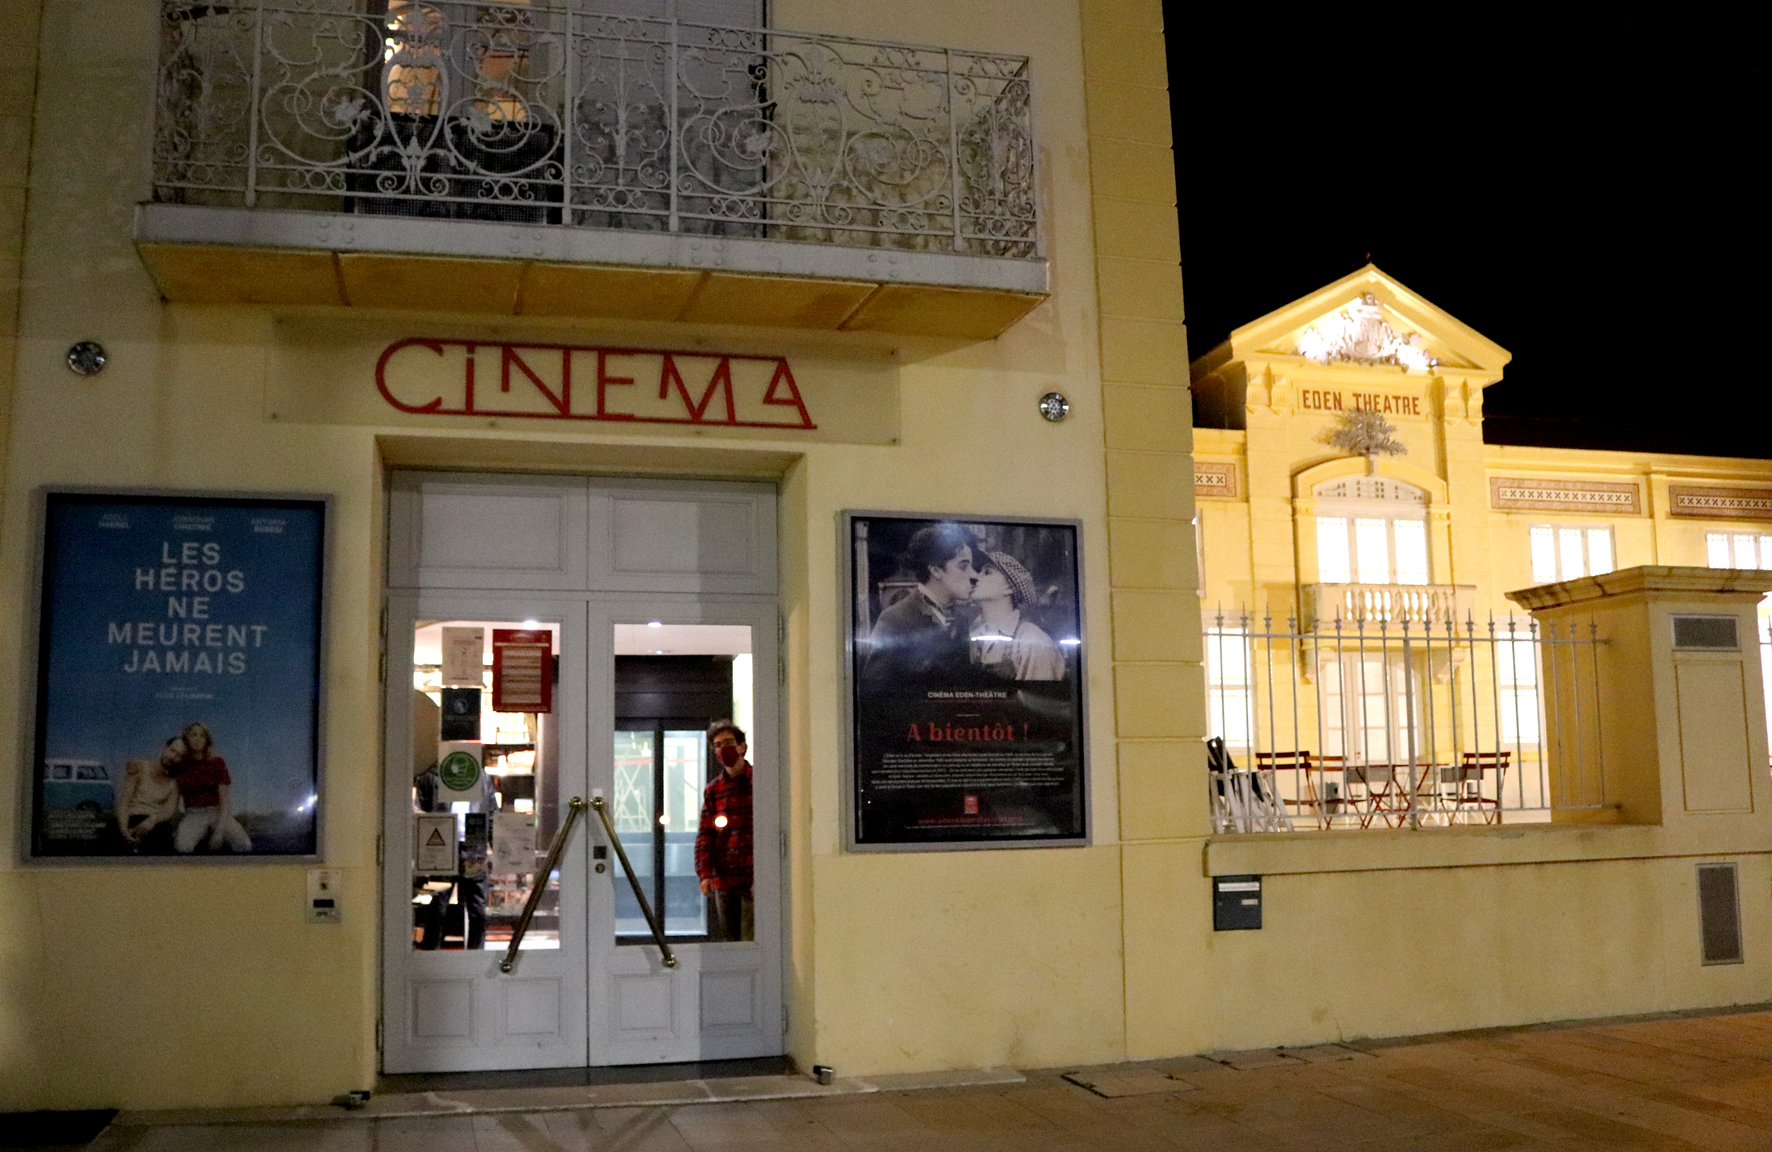 Accueil Cinema Eden Theatre 